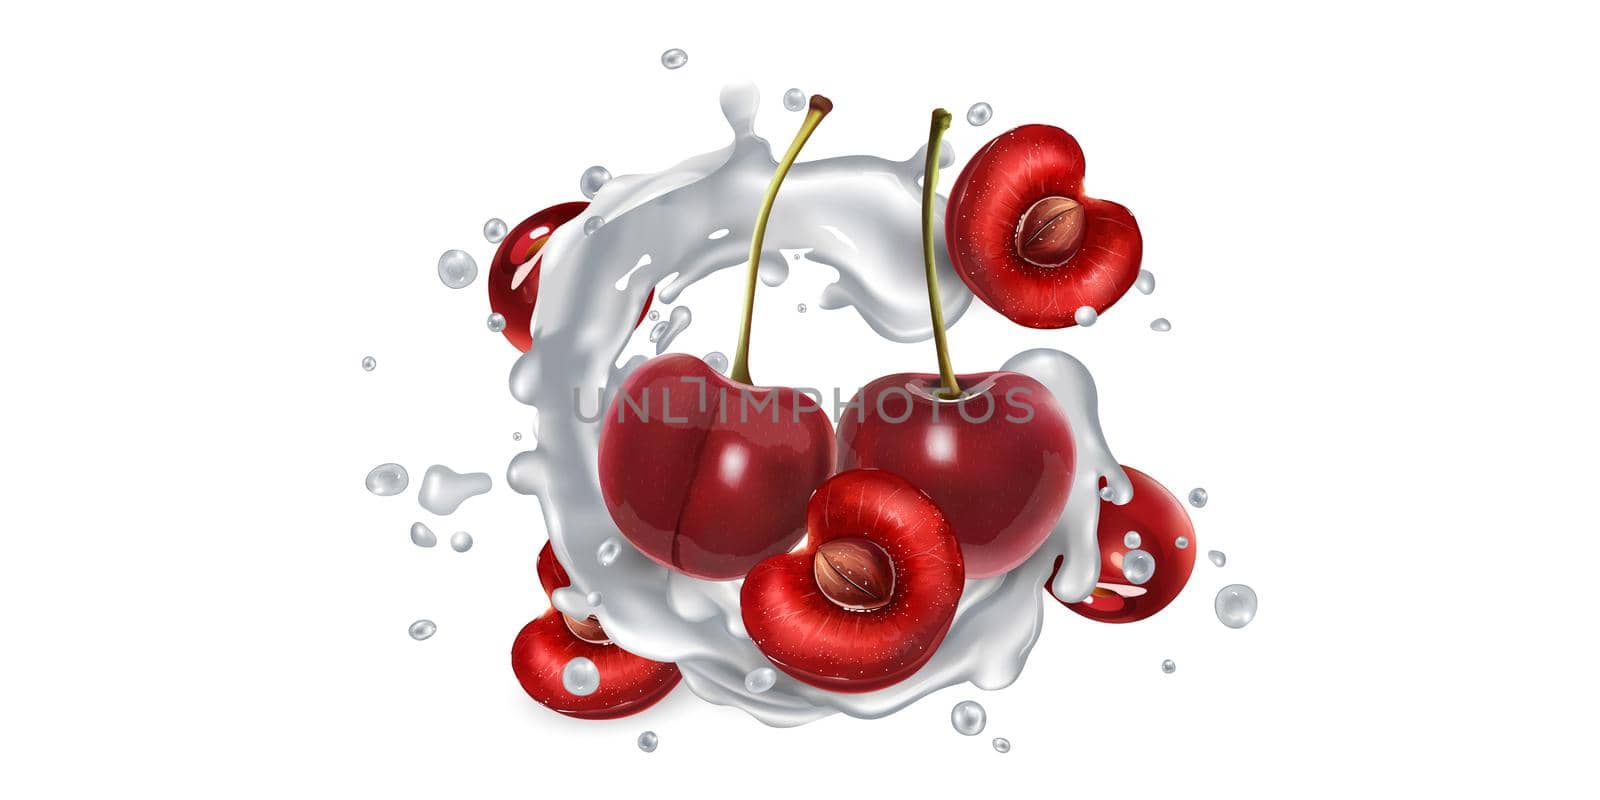 Fresh cherries in milk splashes on a white background. Realistic style illustration.